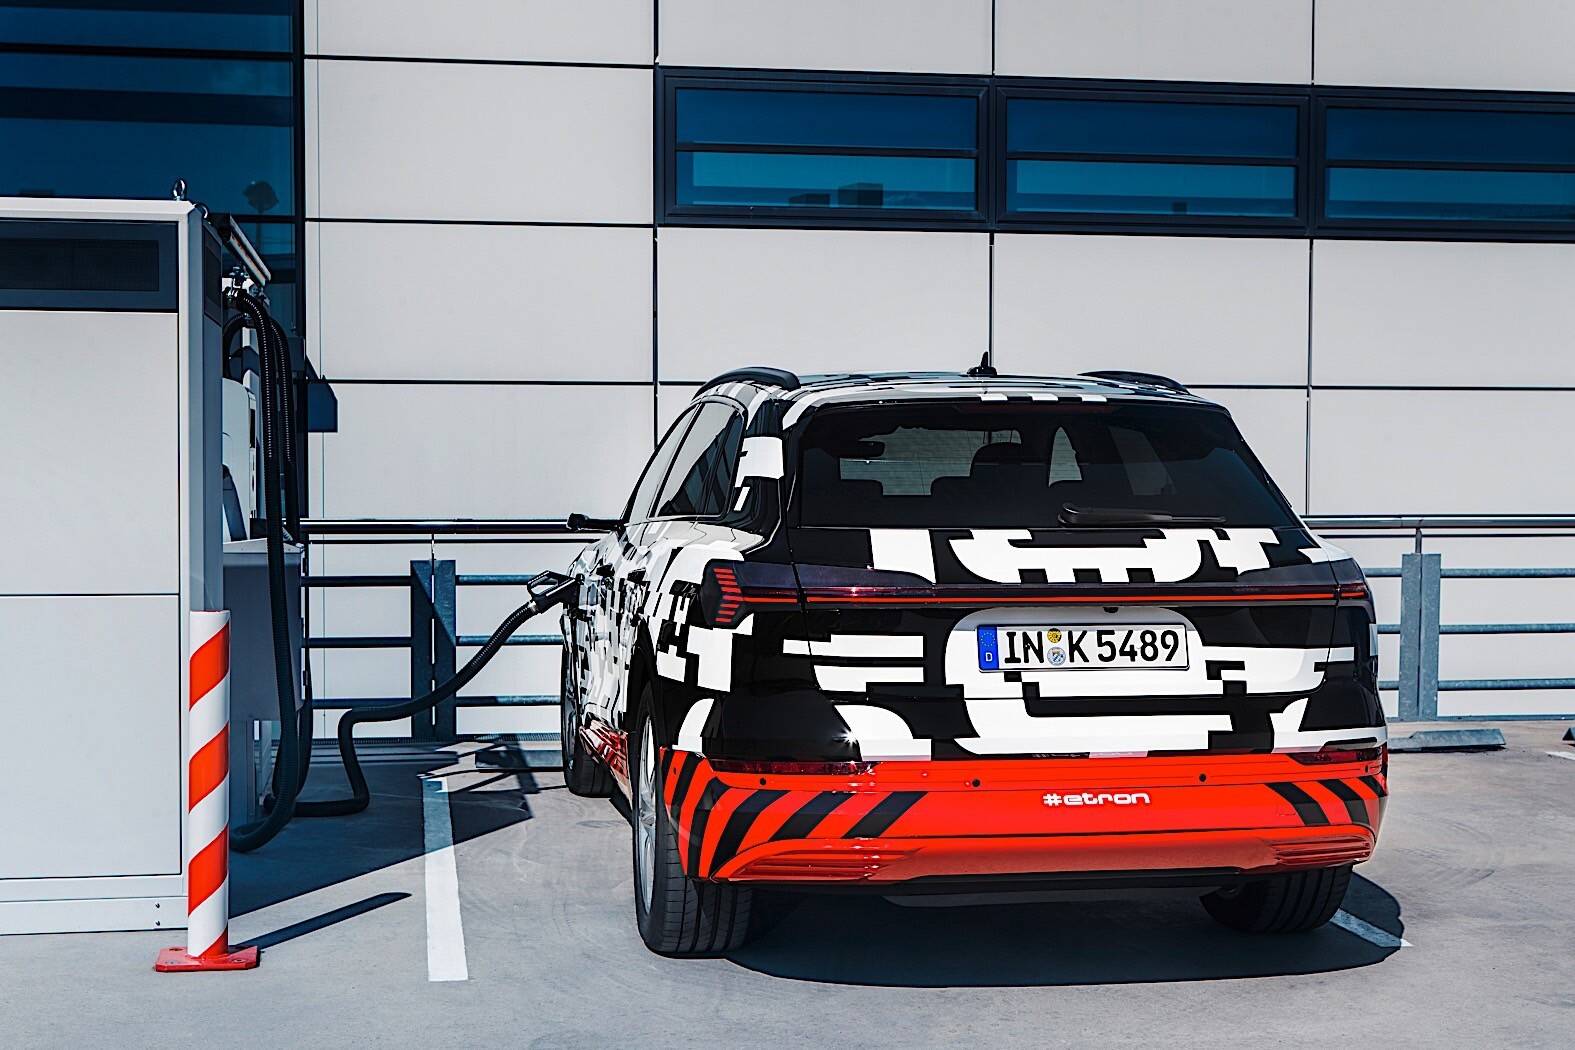 Audi Pebble Beach 18: Nasce elétrico que mistura moto, hatch e carro de  corrida, Carros